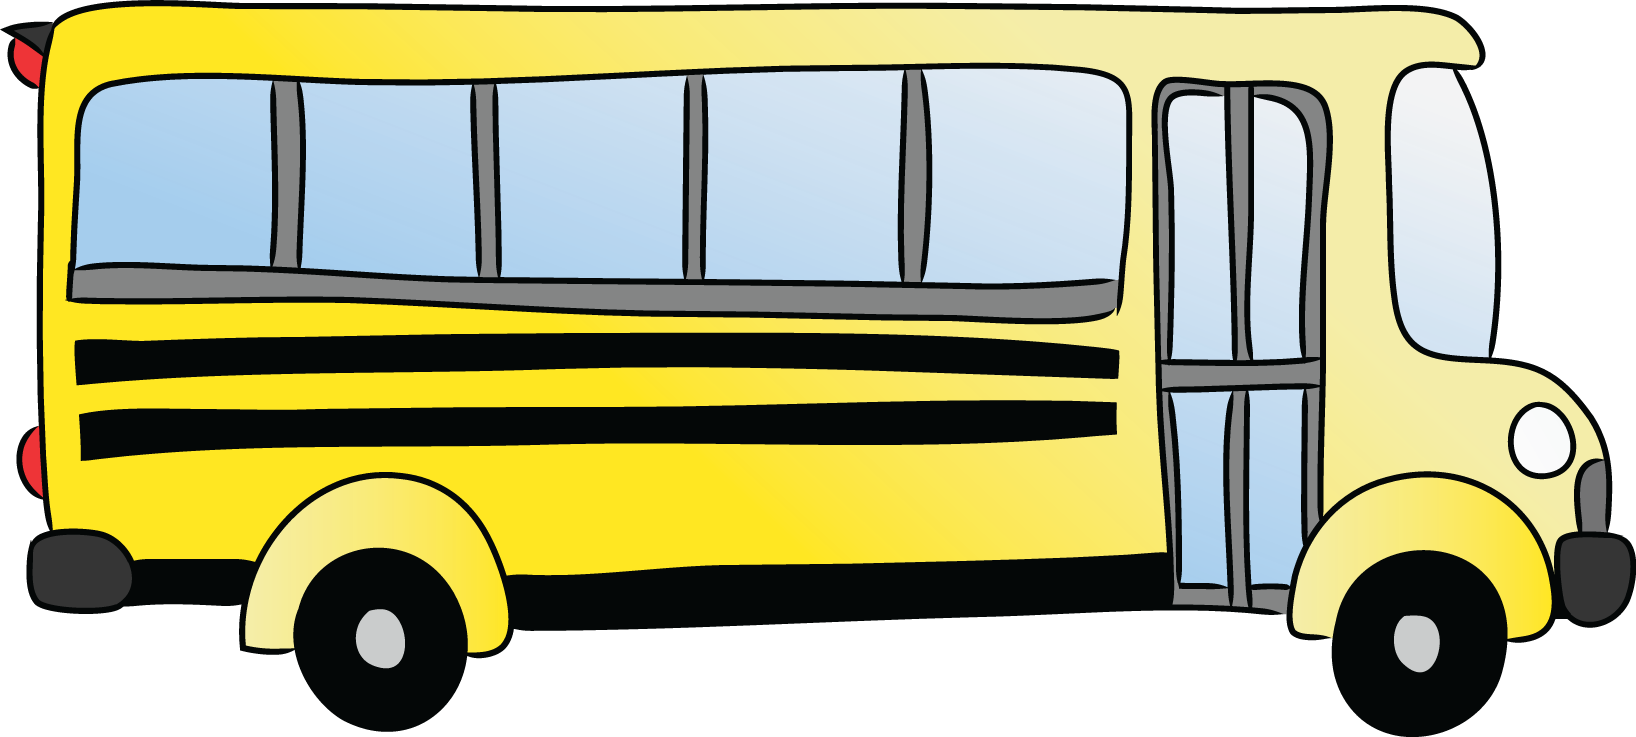 Free to Use & Public Domain School Bus Clip Art